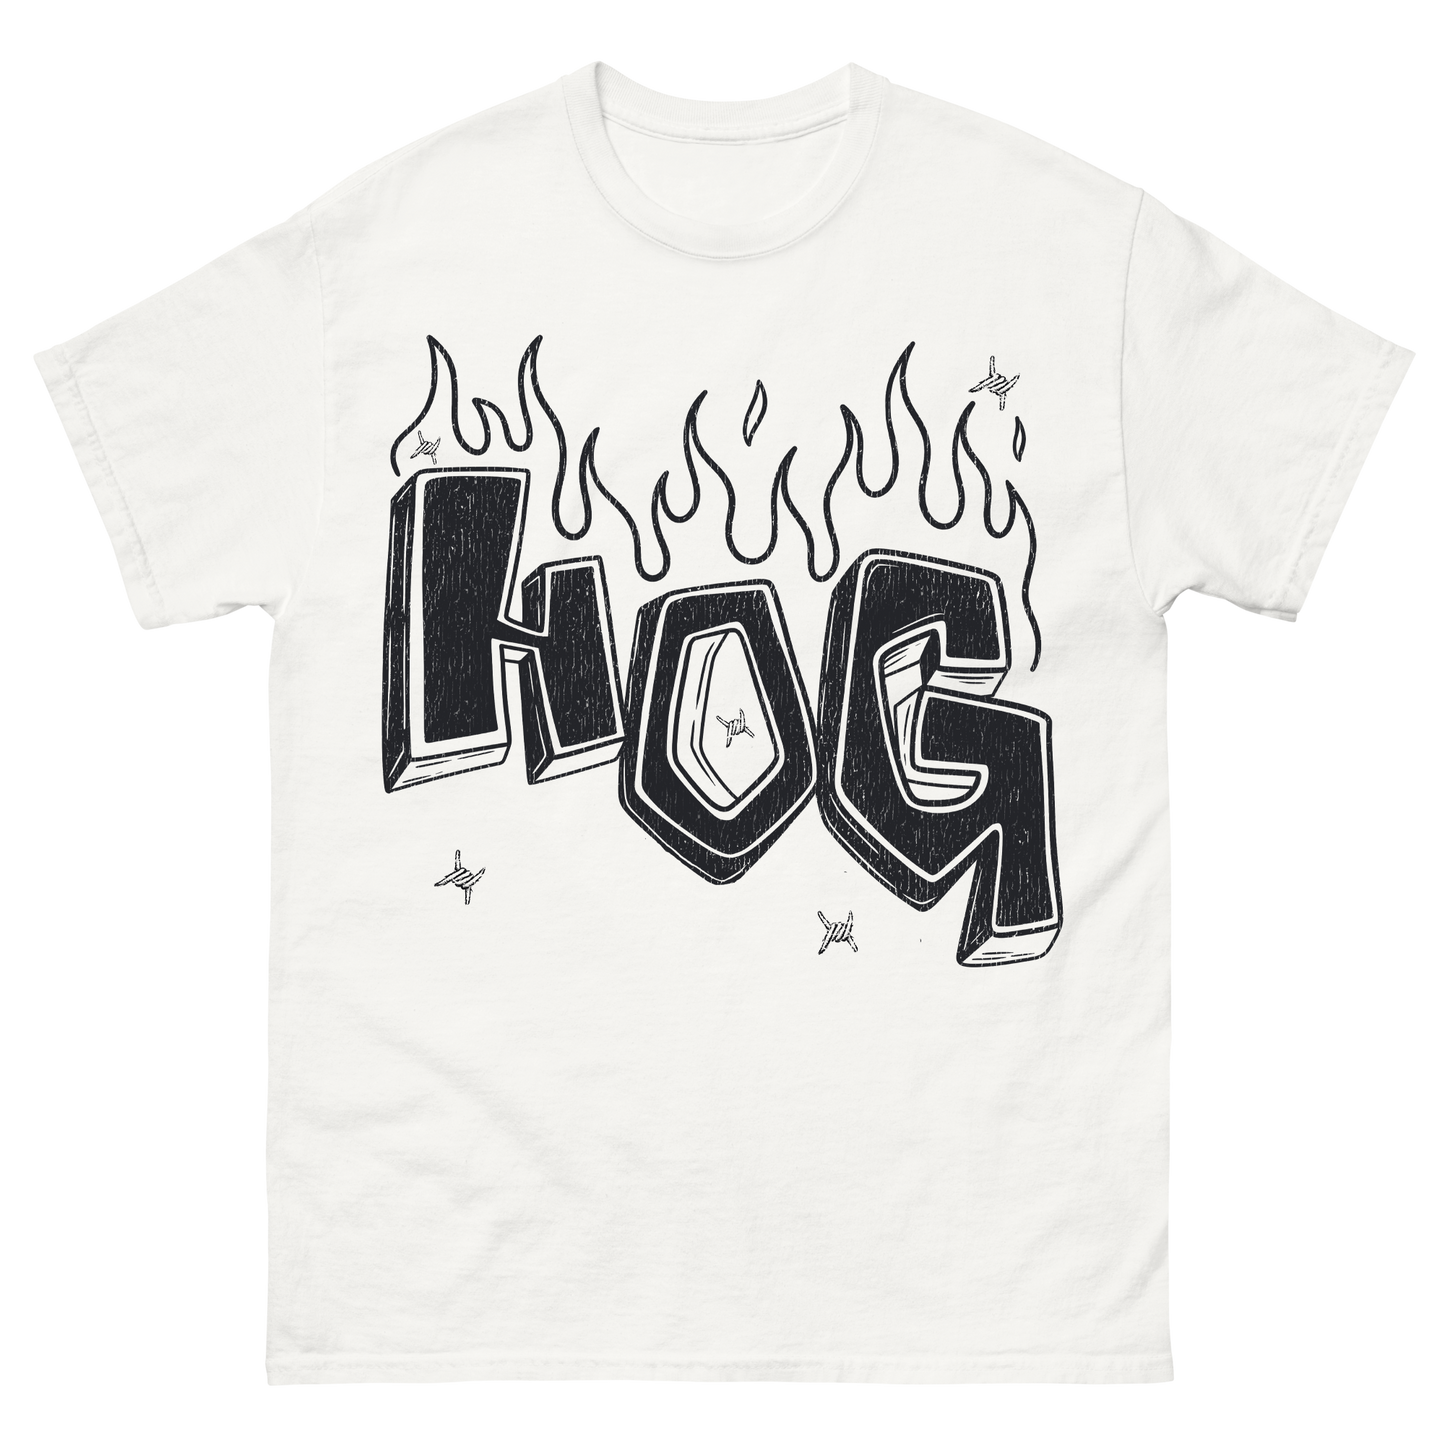 "HOG Flames" T-Shirt